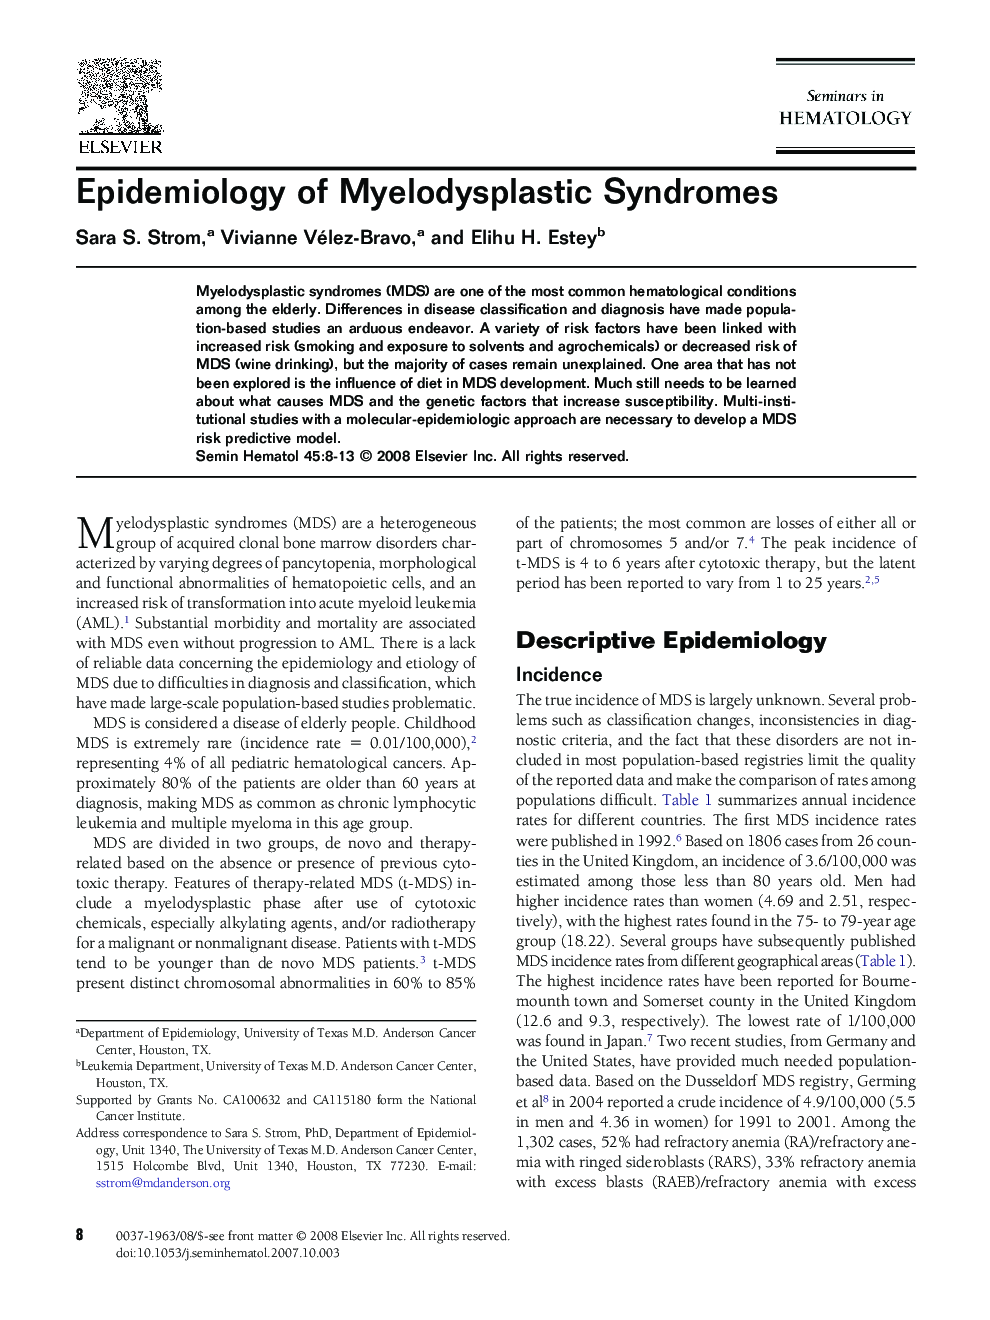 Epidemiology of Myelodysplastic Syndromes